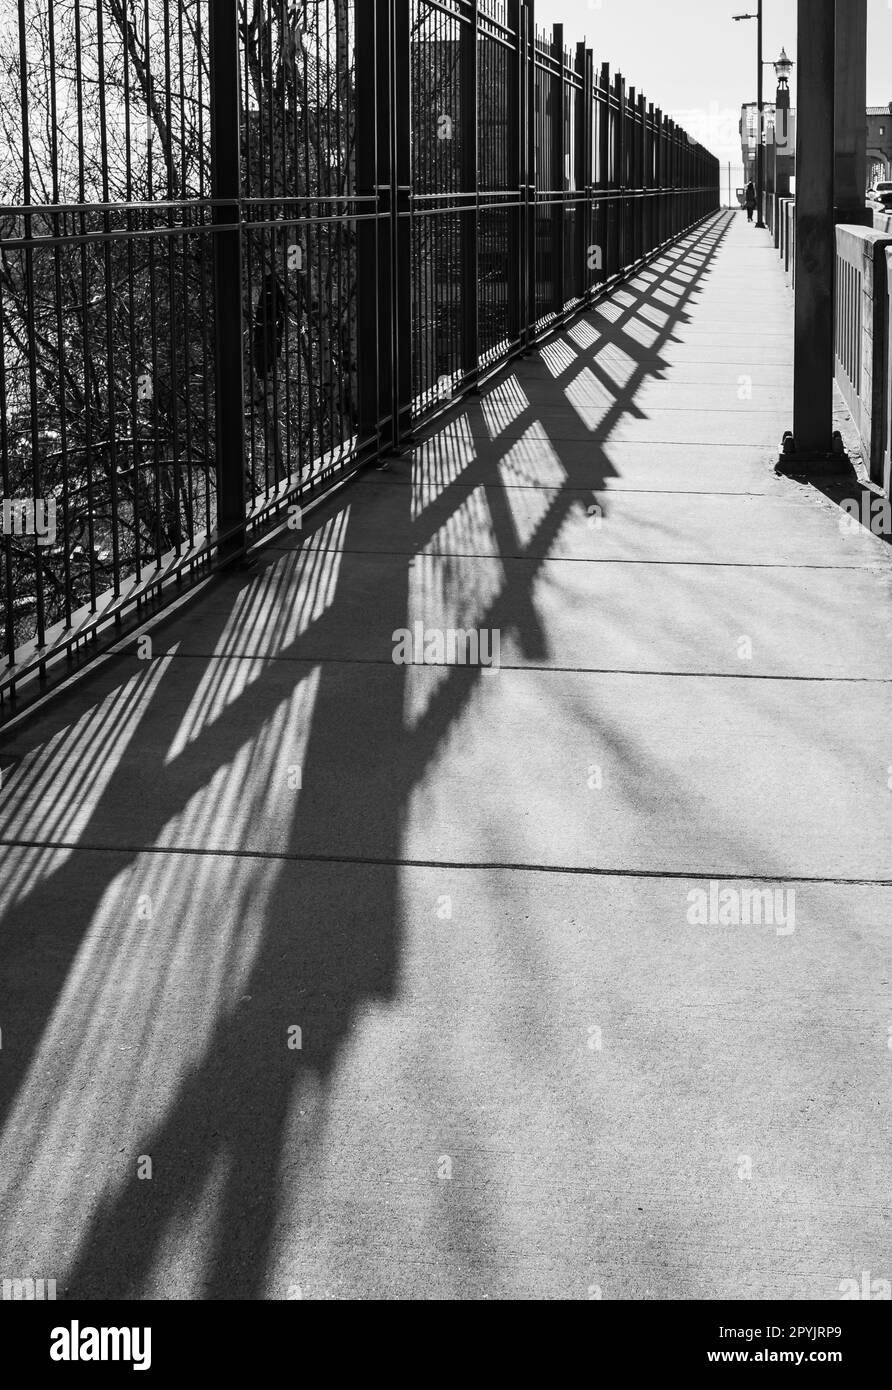 Railing shadow on the bridge. Bridge railing casts a shadow. Abstract bridge railing shadow. Urban scene, street photo, nobody Stock Photo